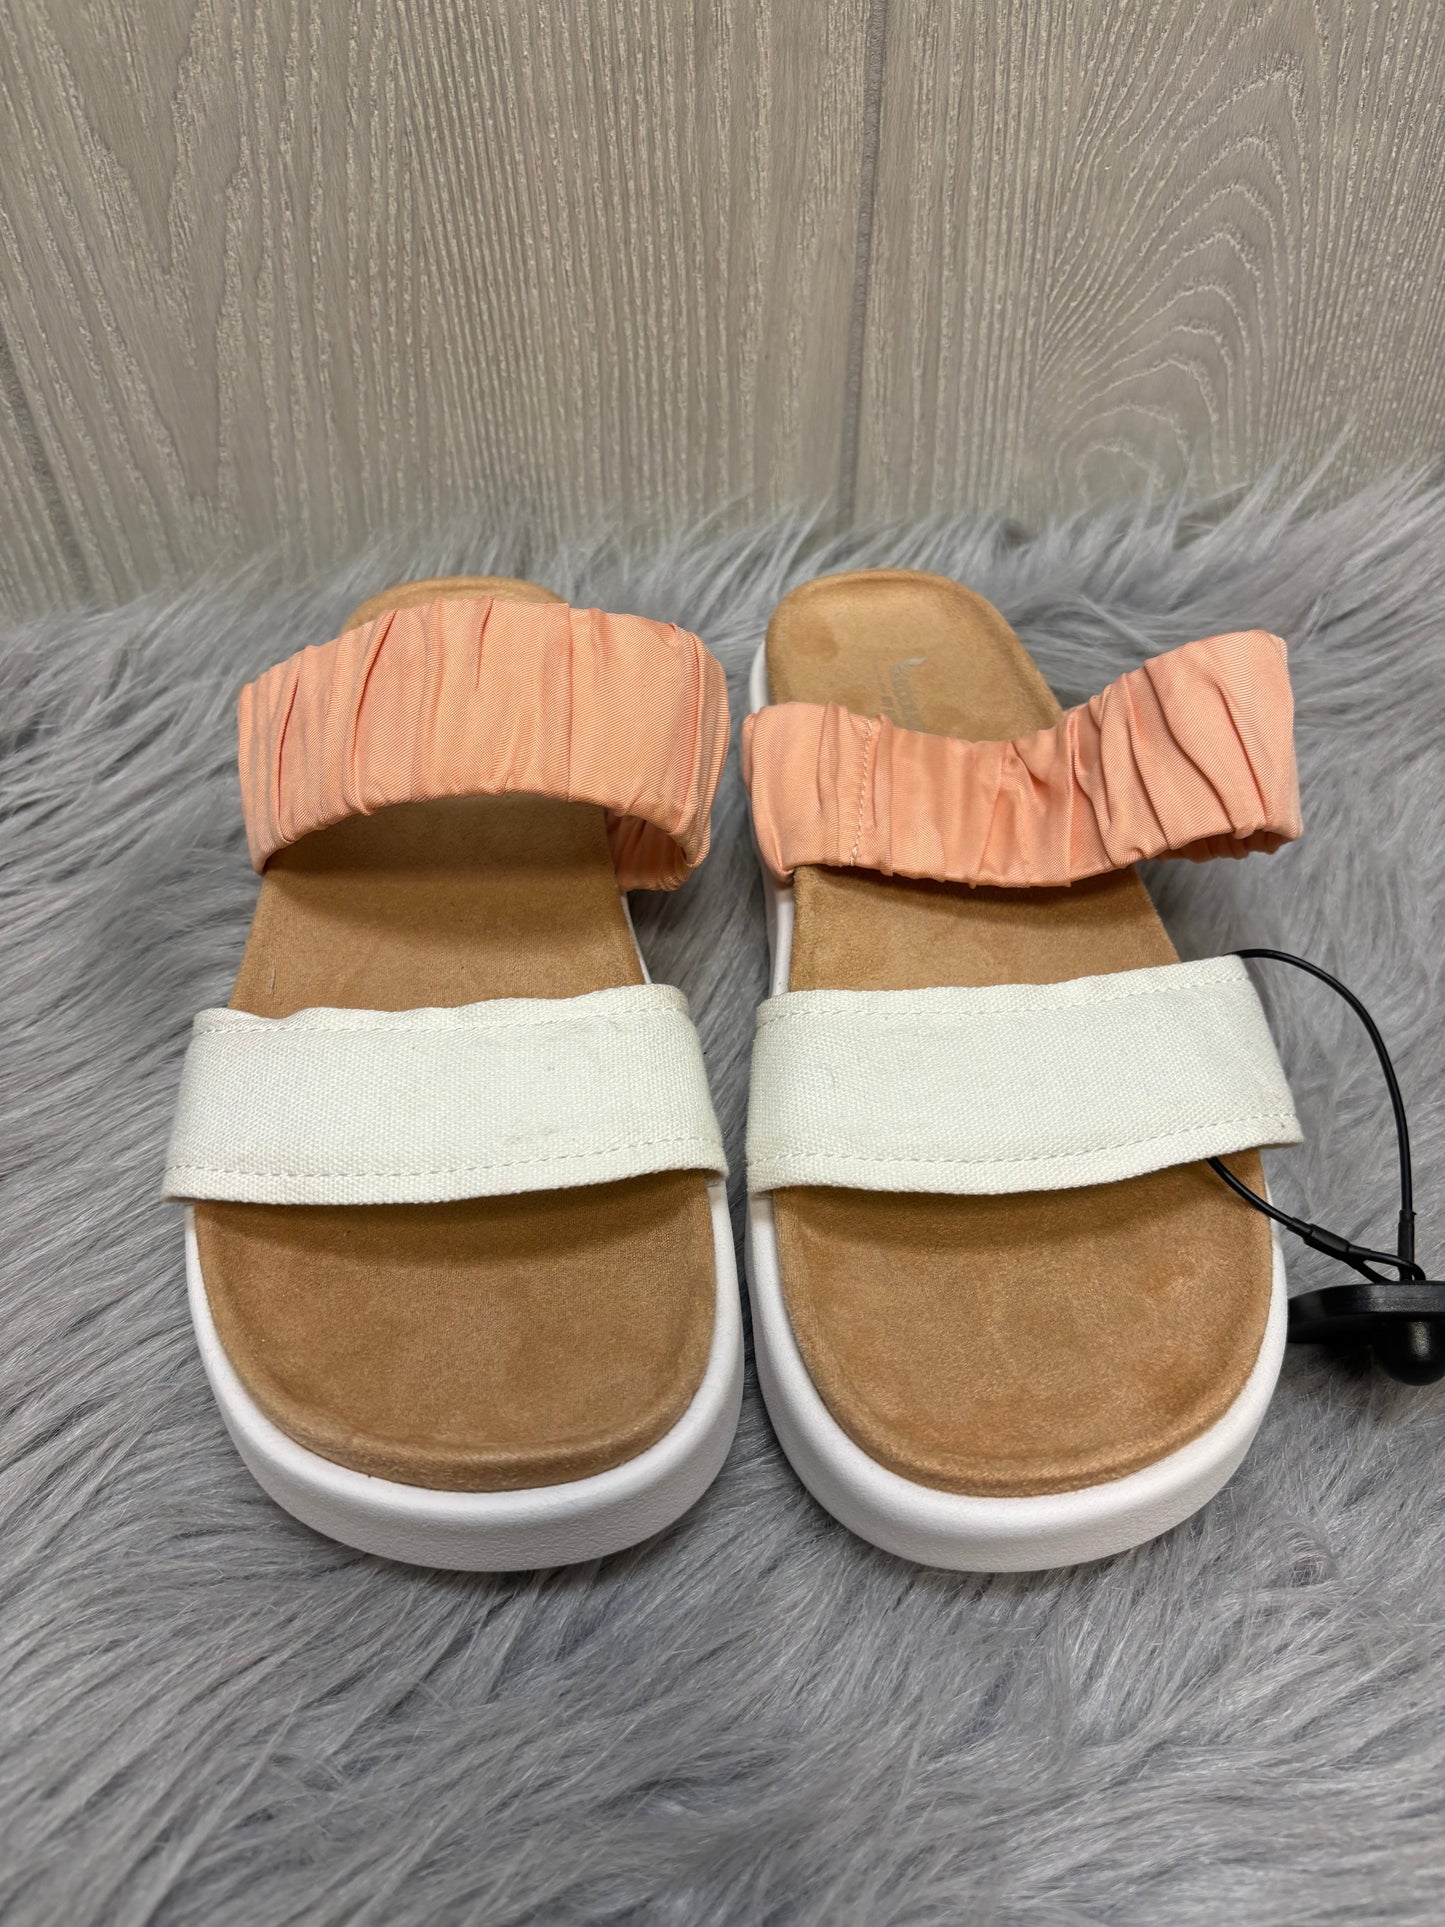 Multi-colored Sandals Flats Koolaburra By Ugg, Size 7.5